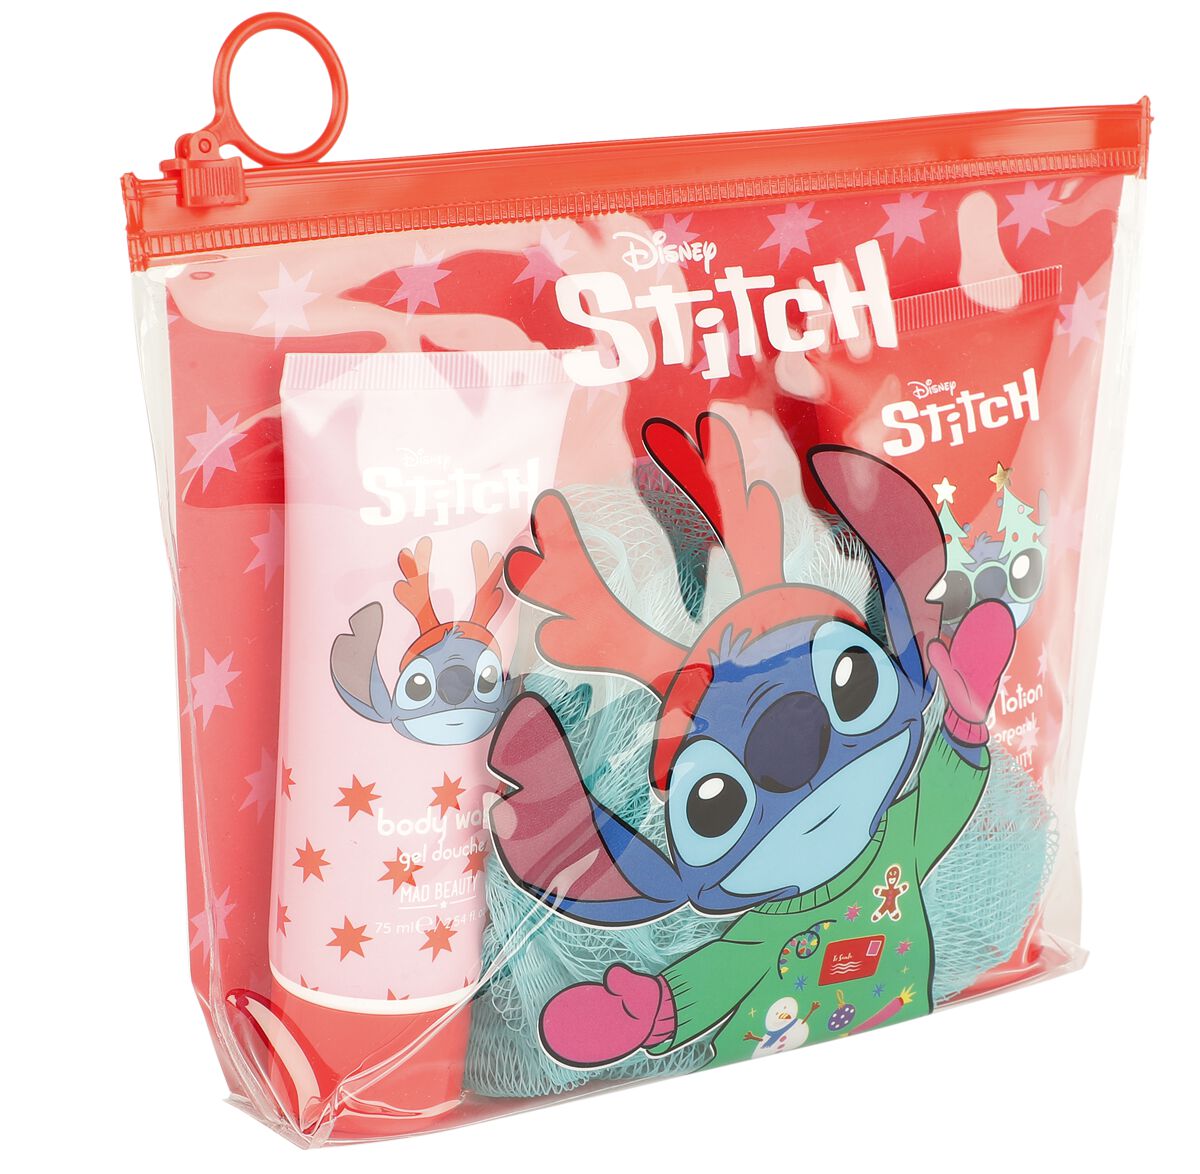 Lilo & Stitch Mad Beauty - Stitch - Gift set Shower Set multicolor product